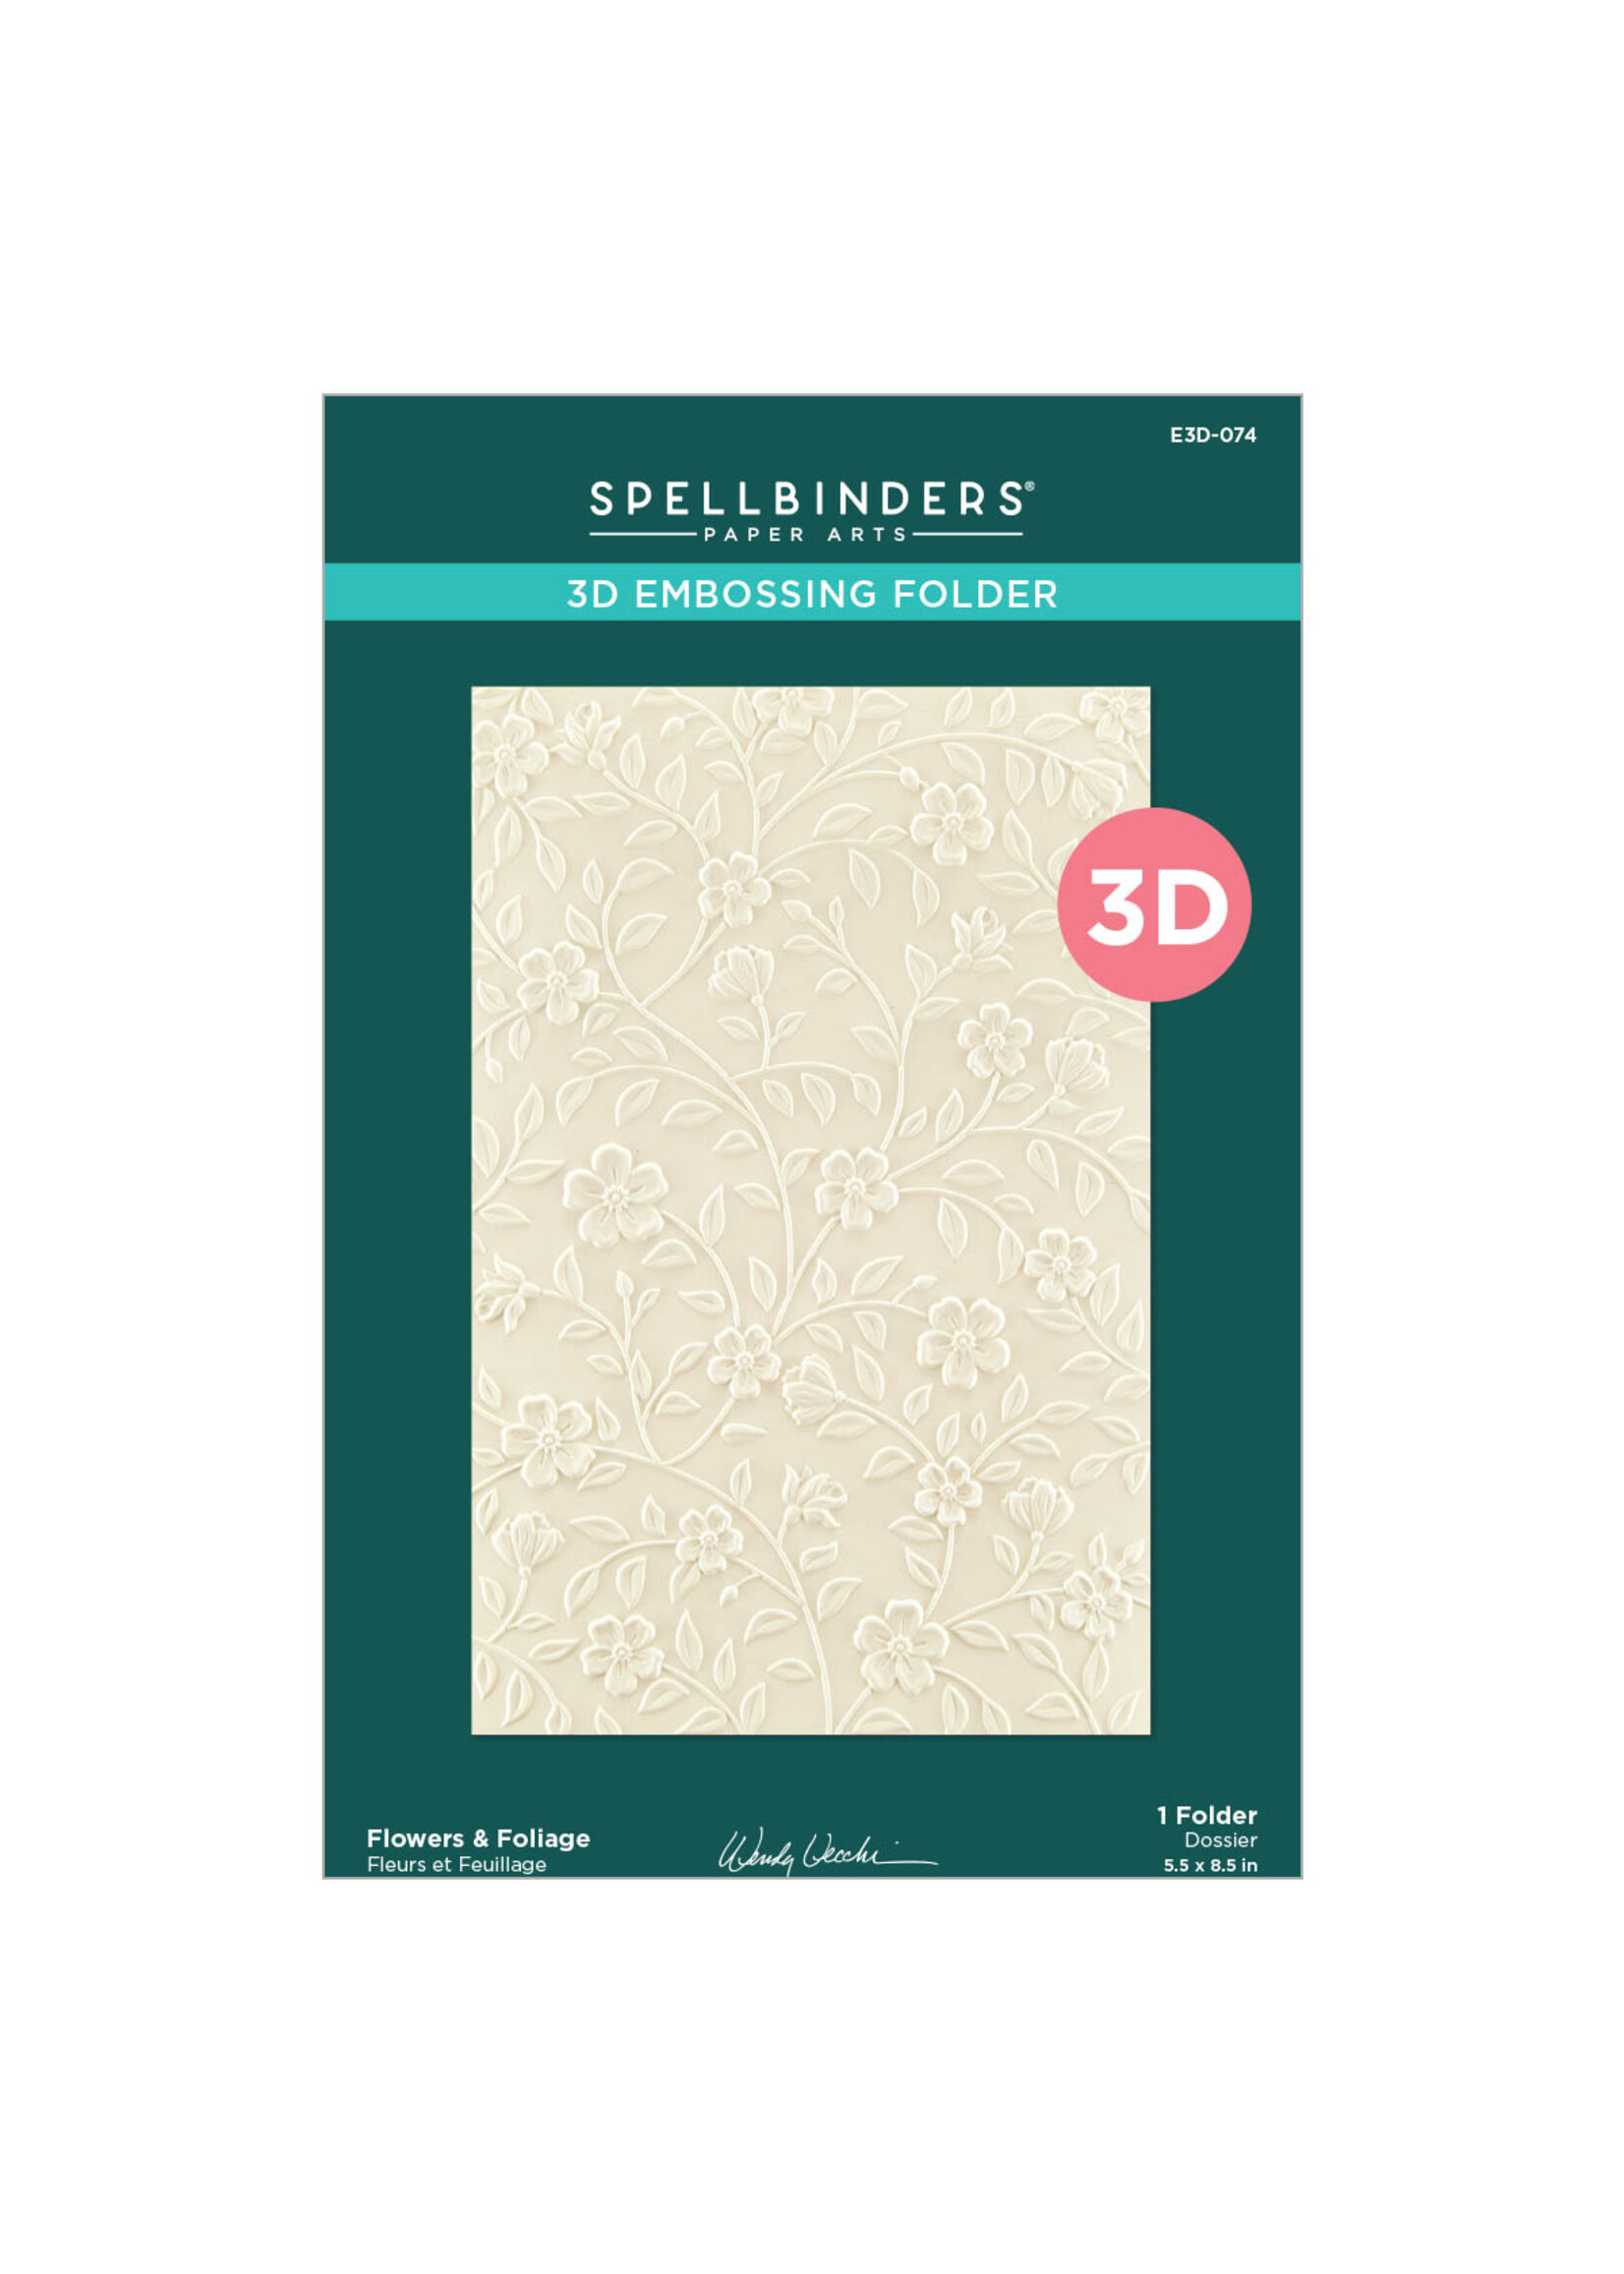 spellbinders Flowers & Foliage 3D Embossing Folder